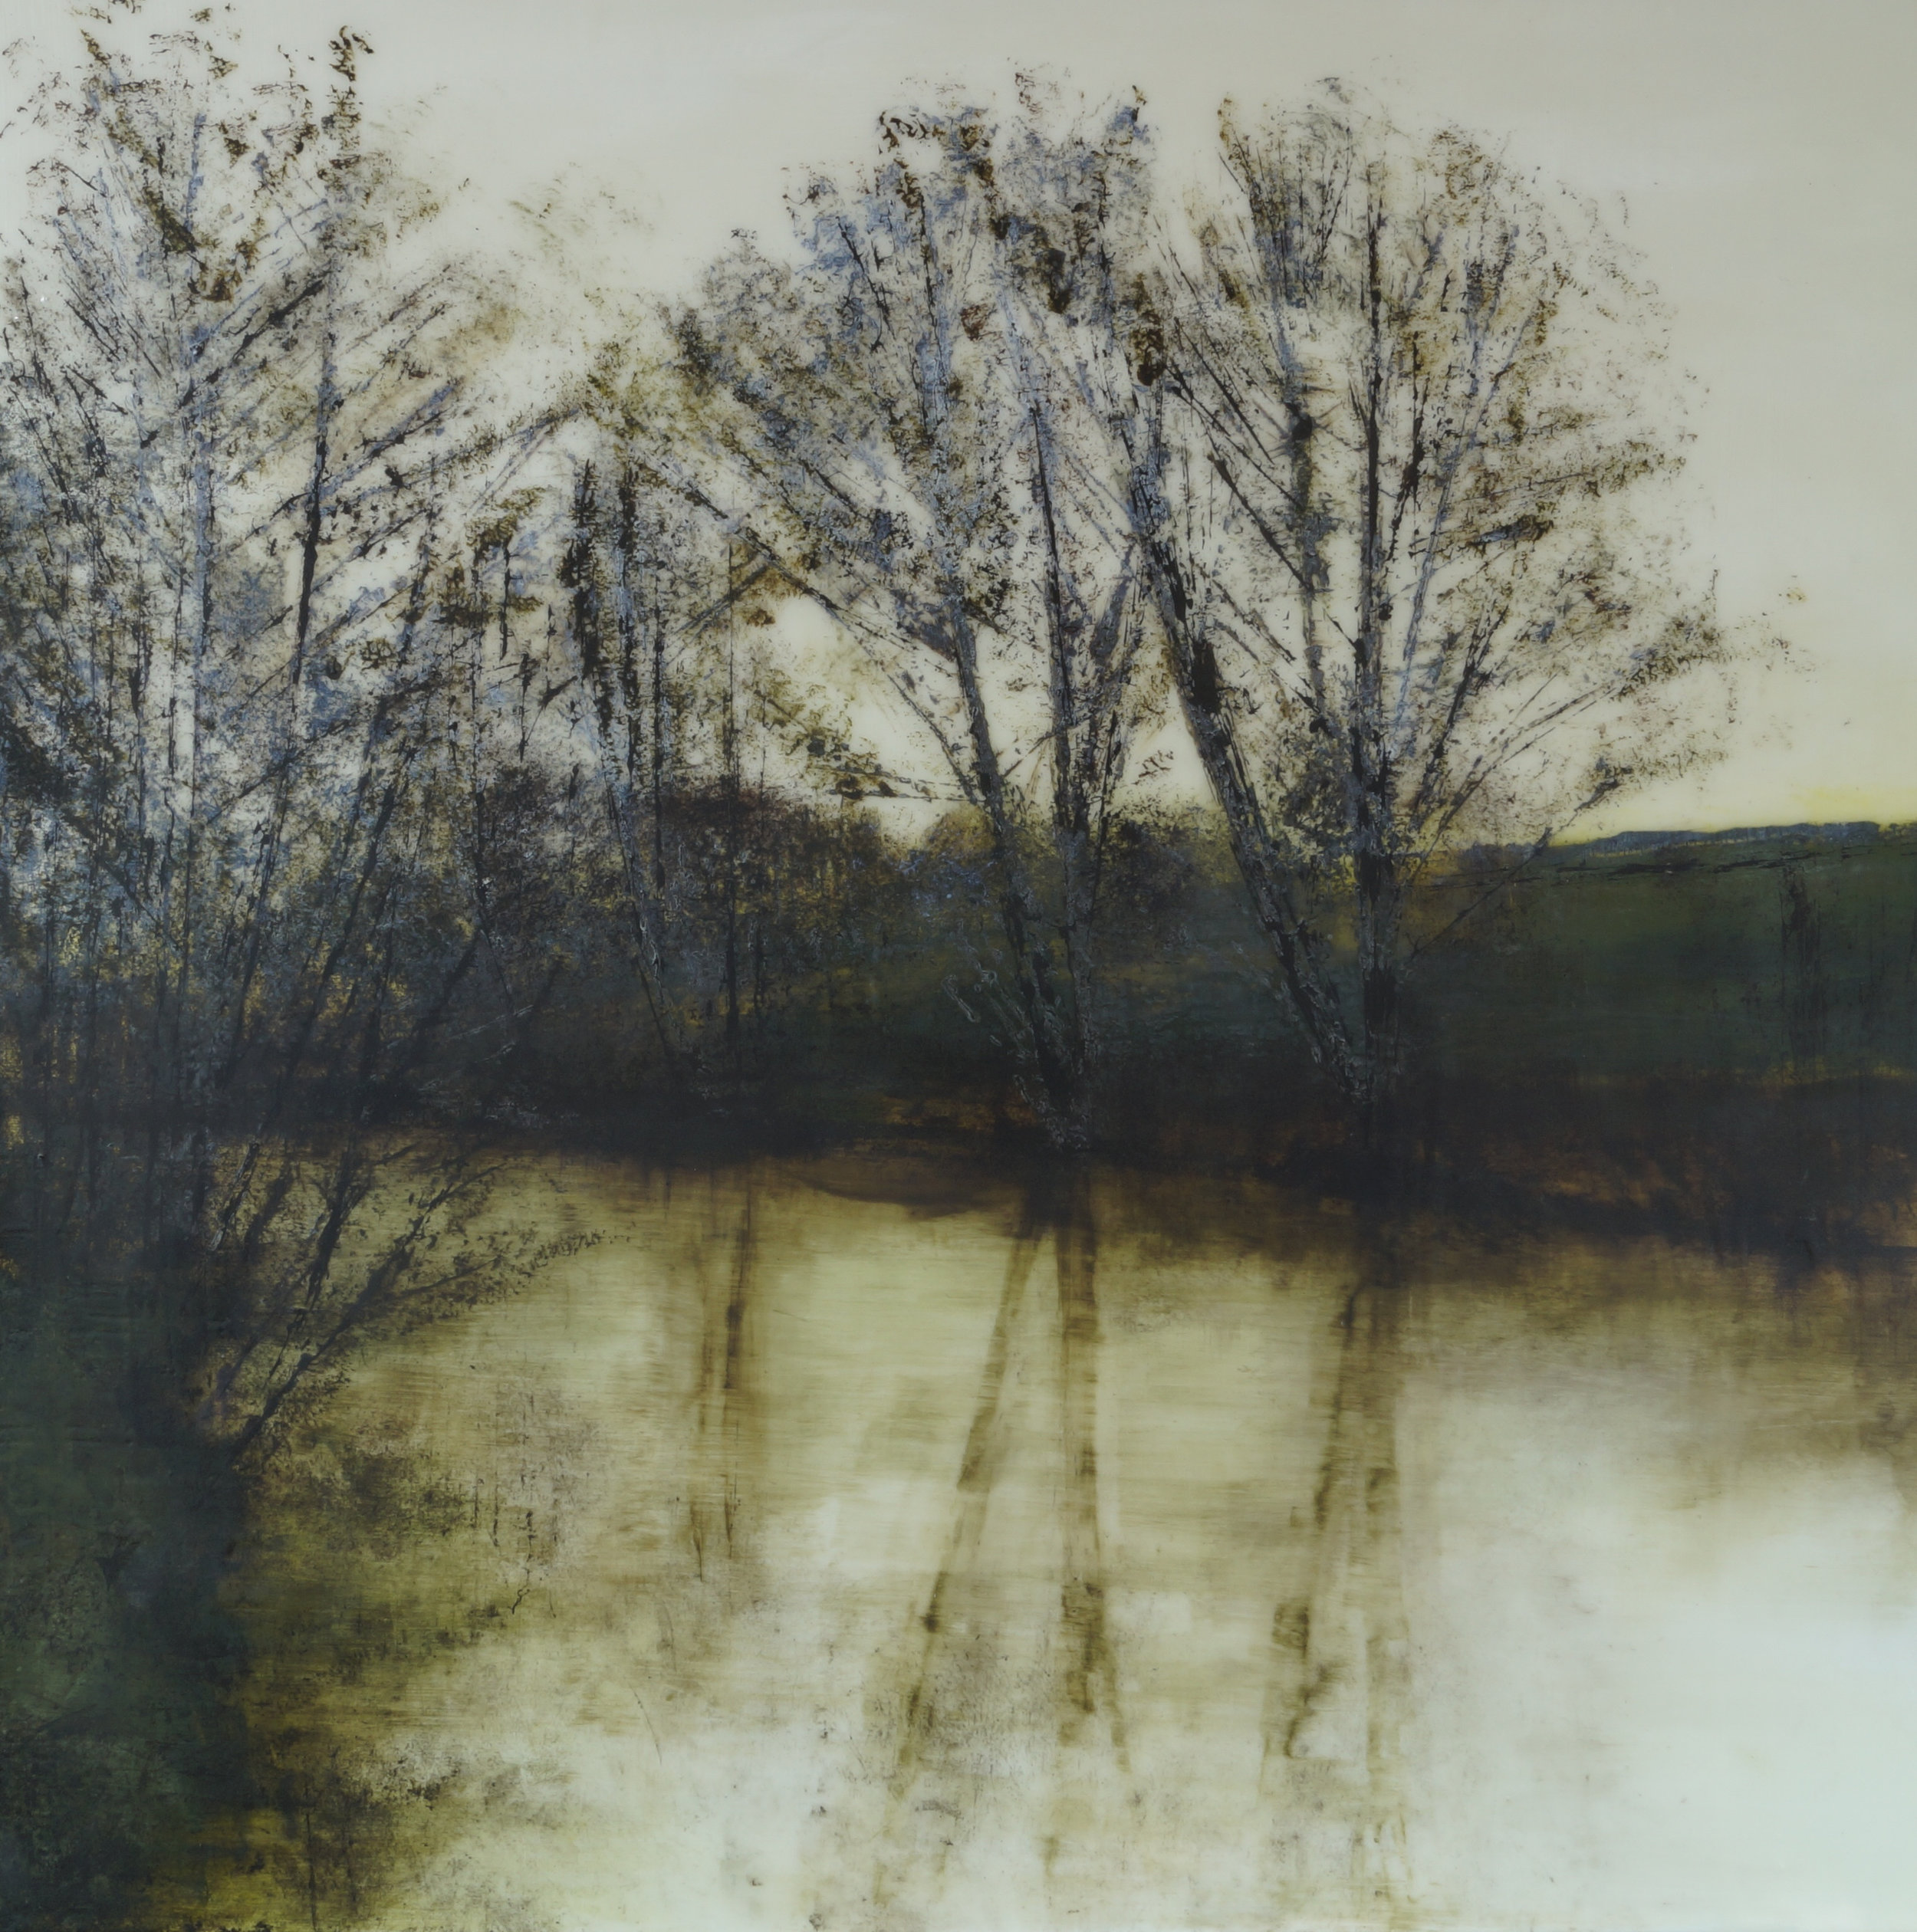  Title: Rain Reflections ize: 60 x 60 cm Medium:&nbsp;Acrylic and epoxy resin on canvas 